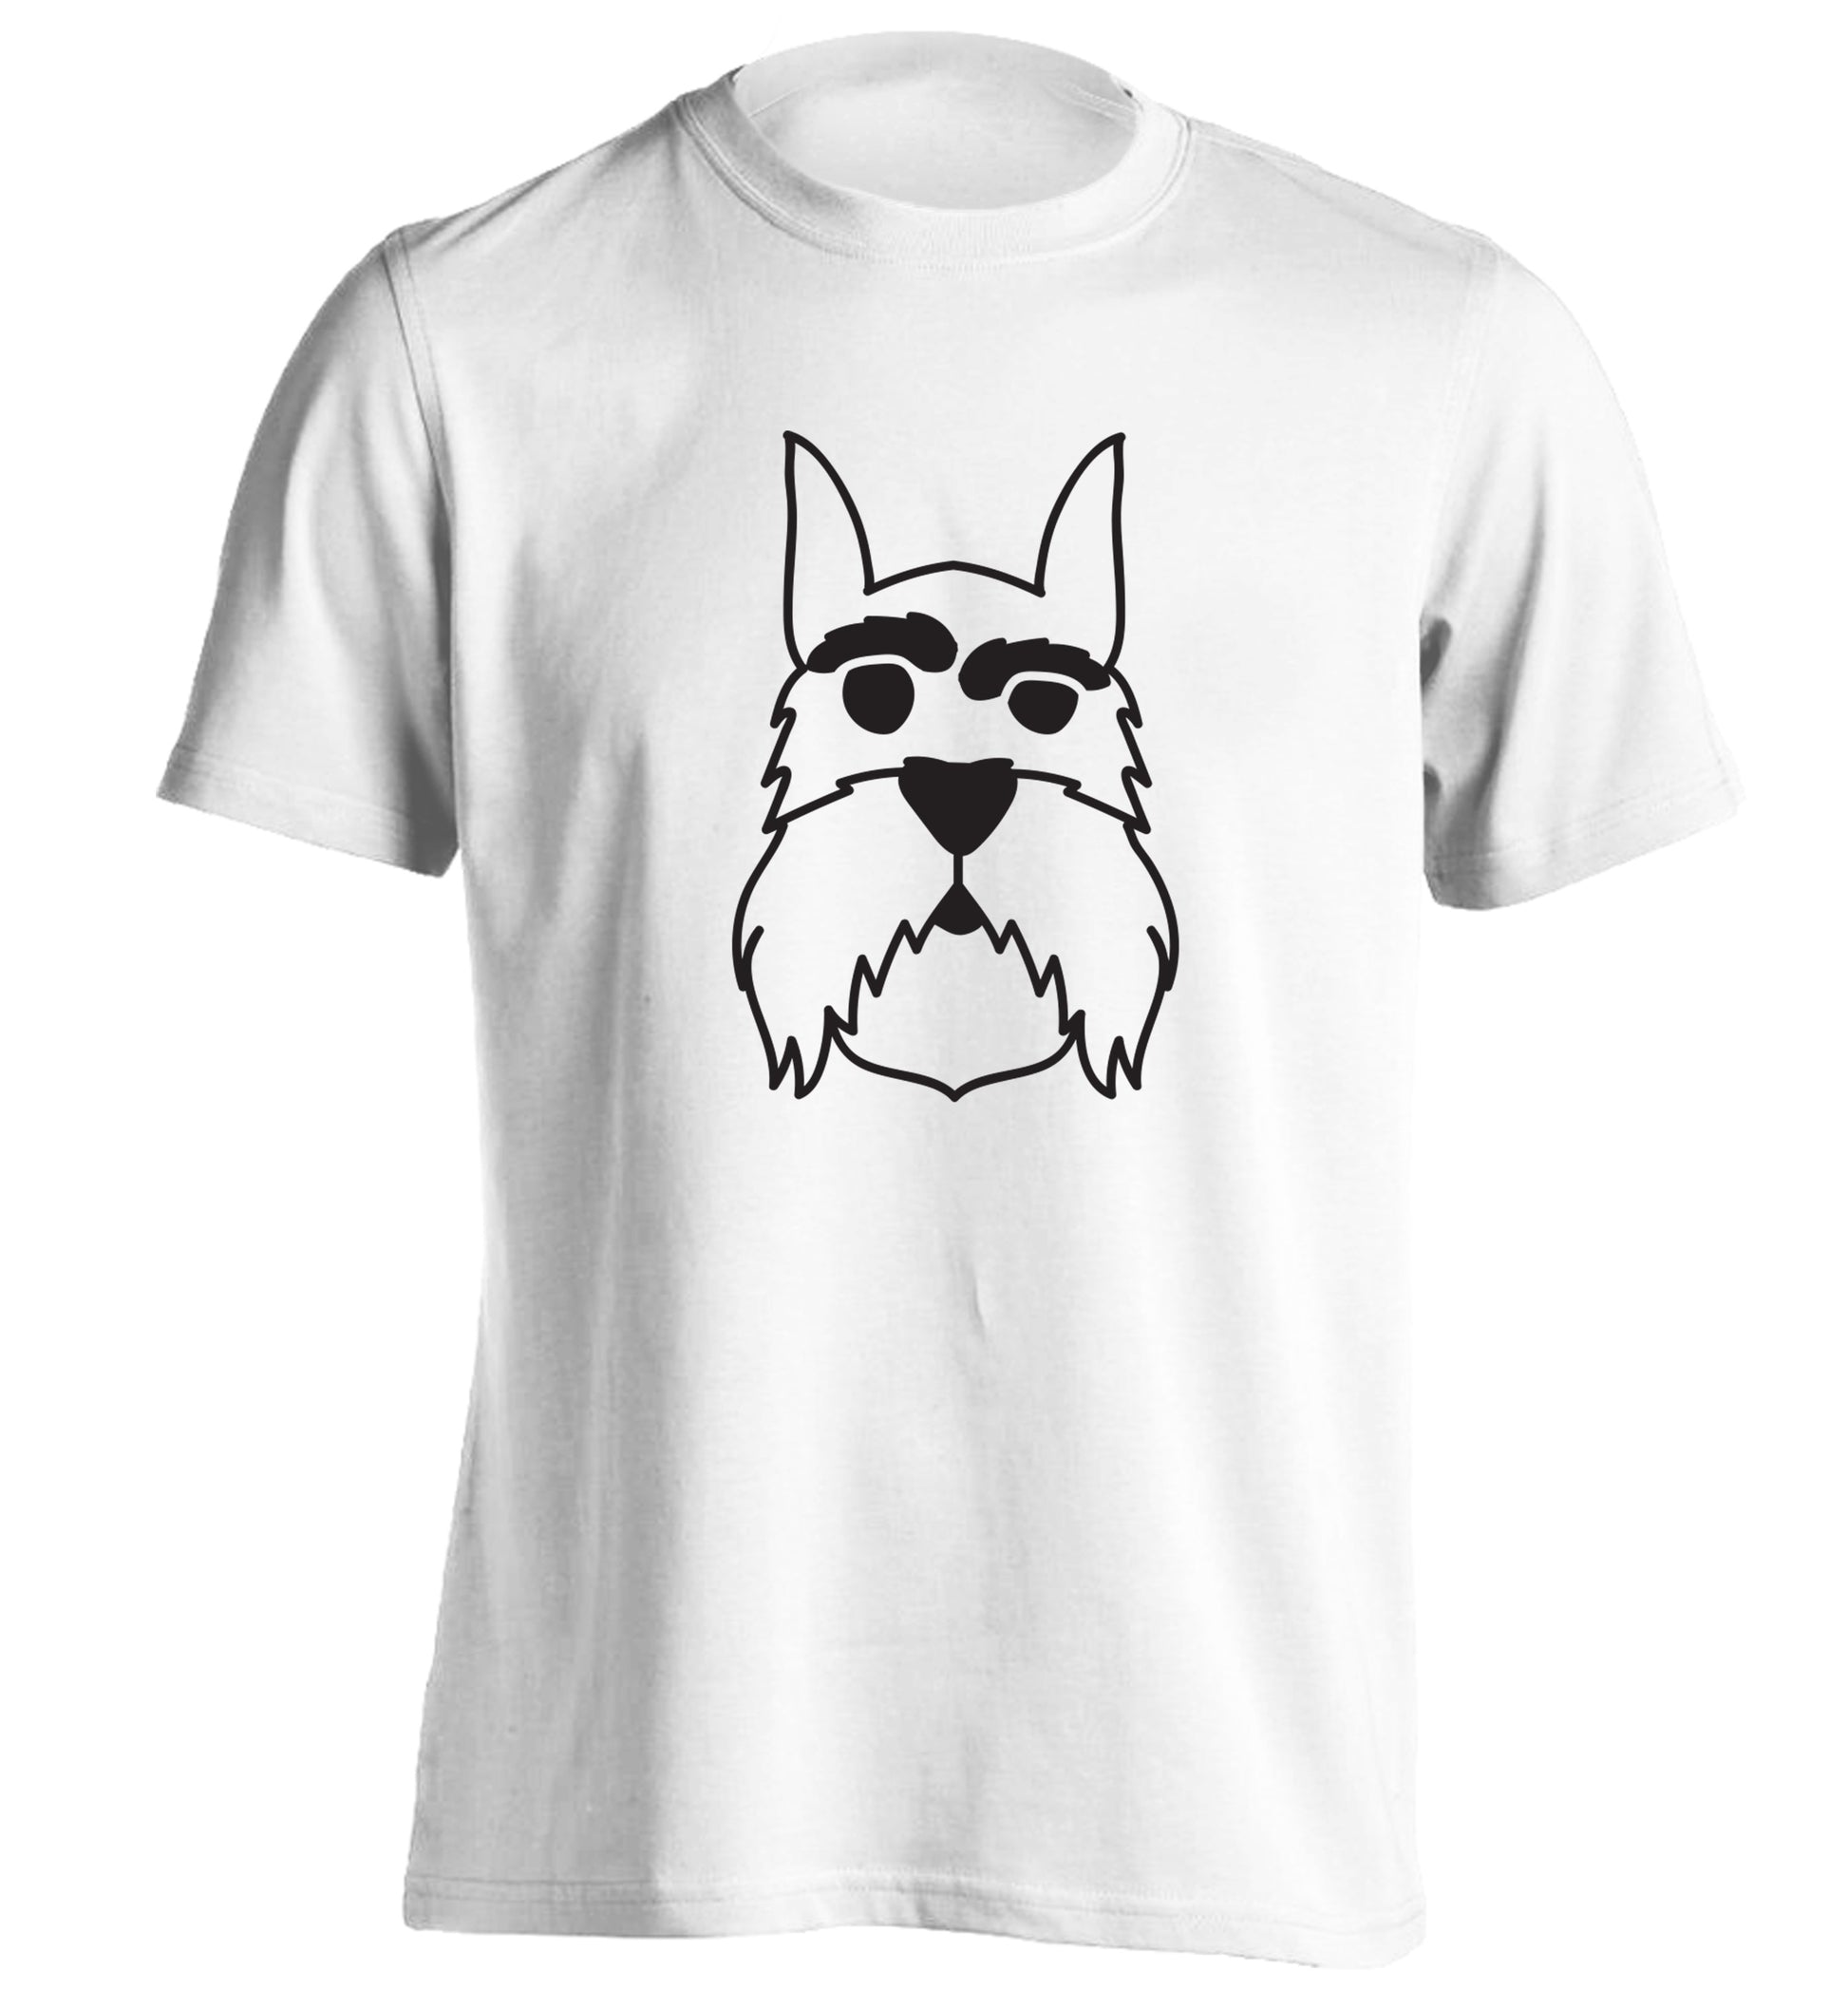 Schnauzer dog illustration adults unisex white Tshirt 2XL